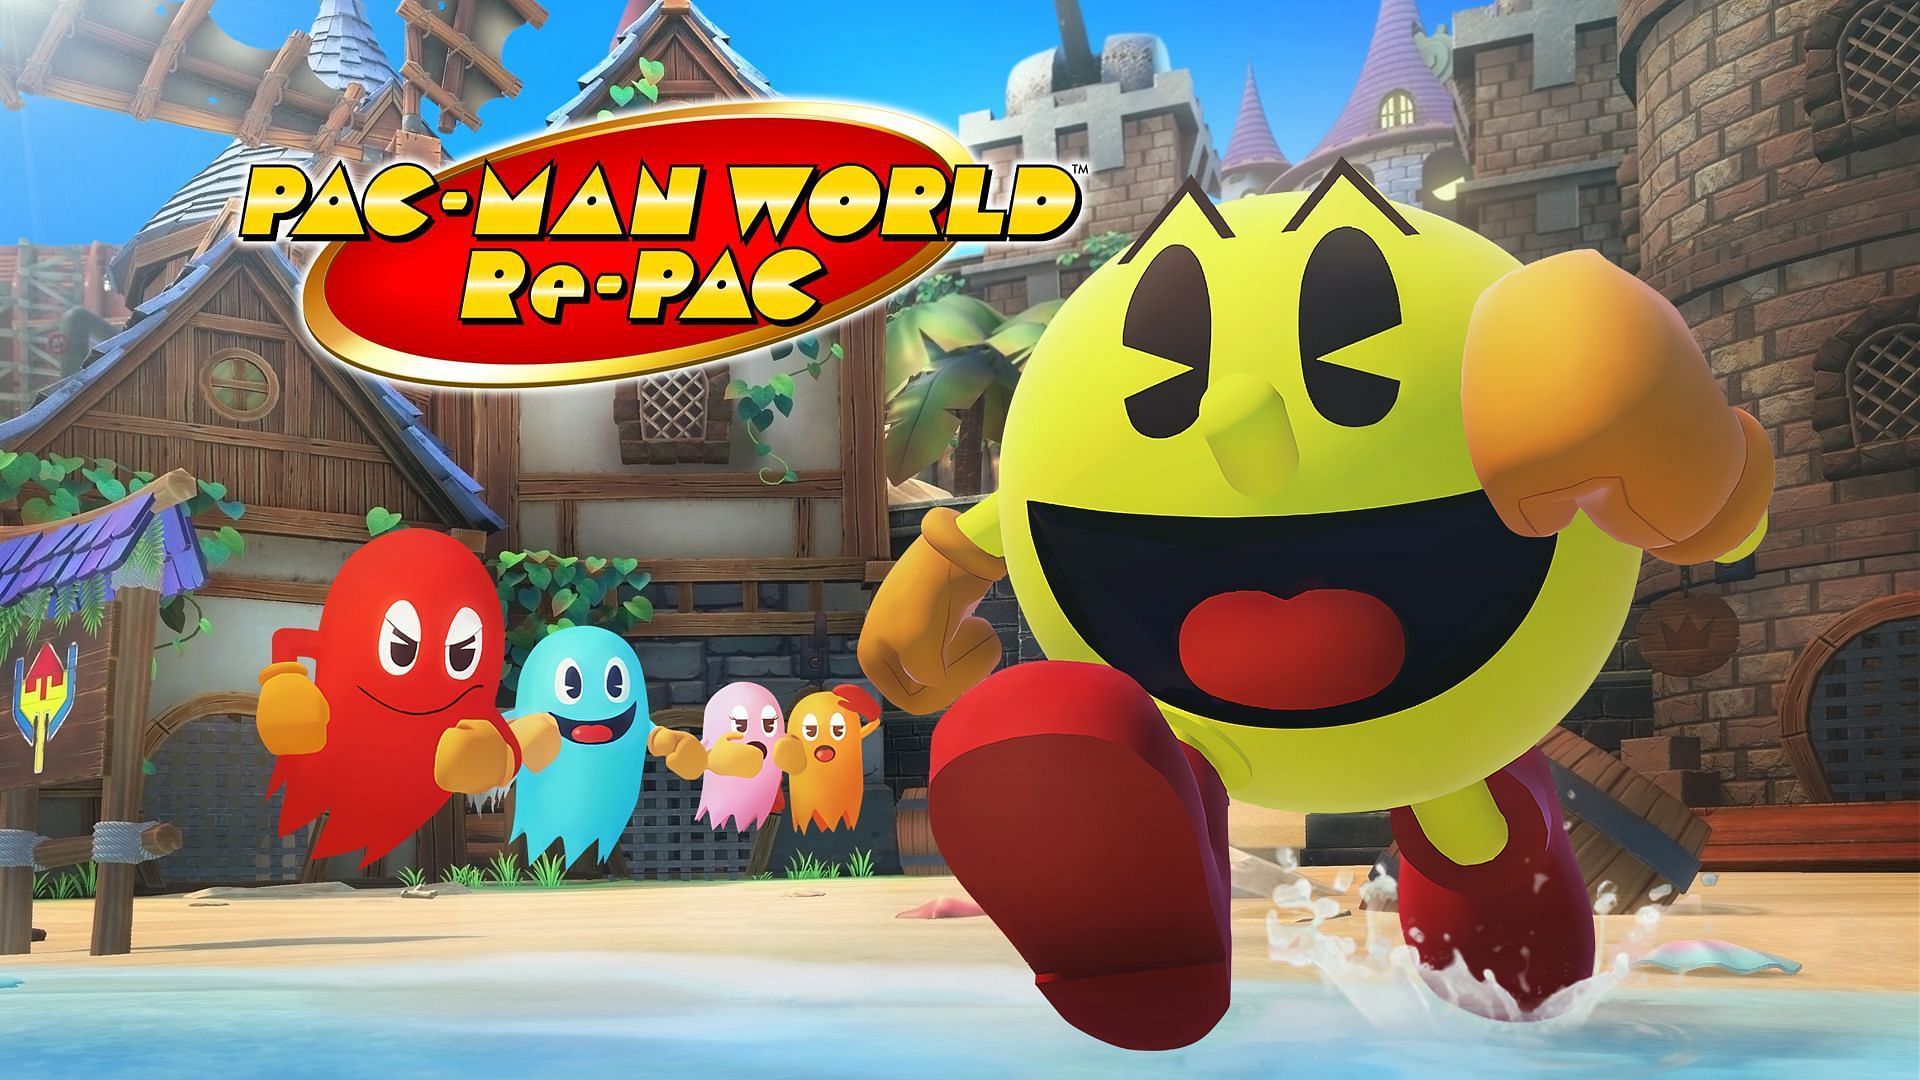 Official artwork for Pac-Man World: Re-Pac (Image via Bandai Namco)